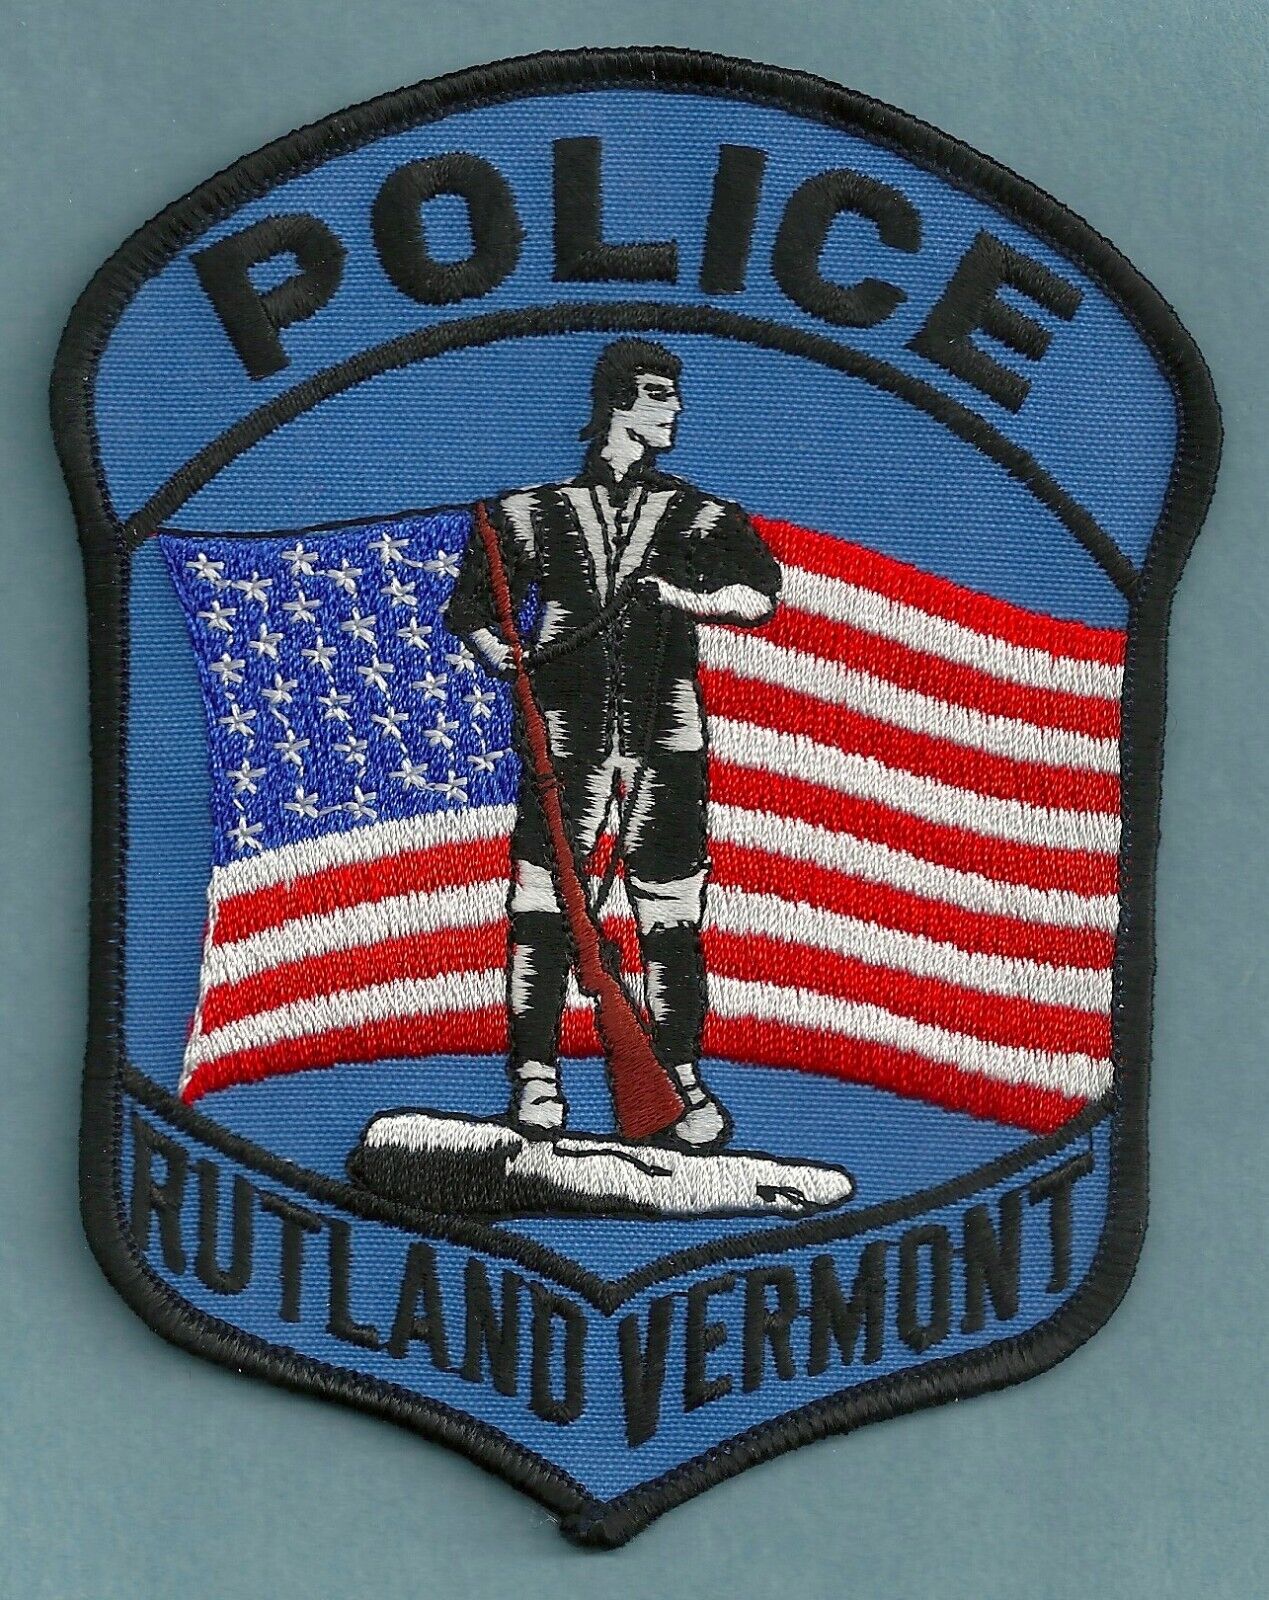 RUTLAND VERMONT POLICE PATCH